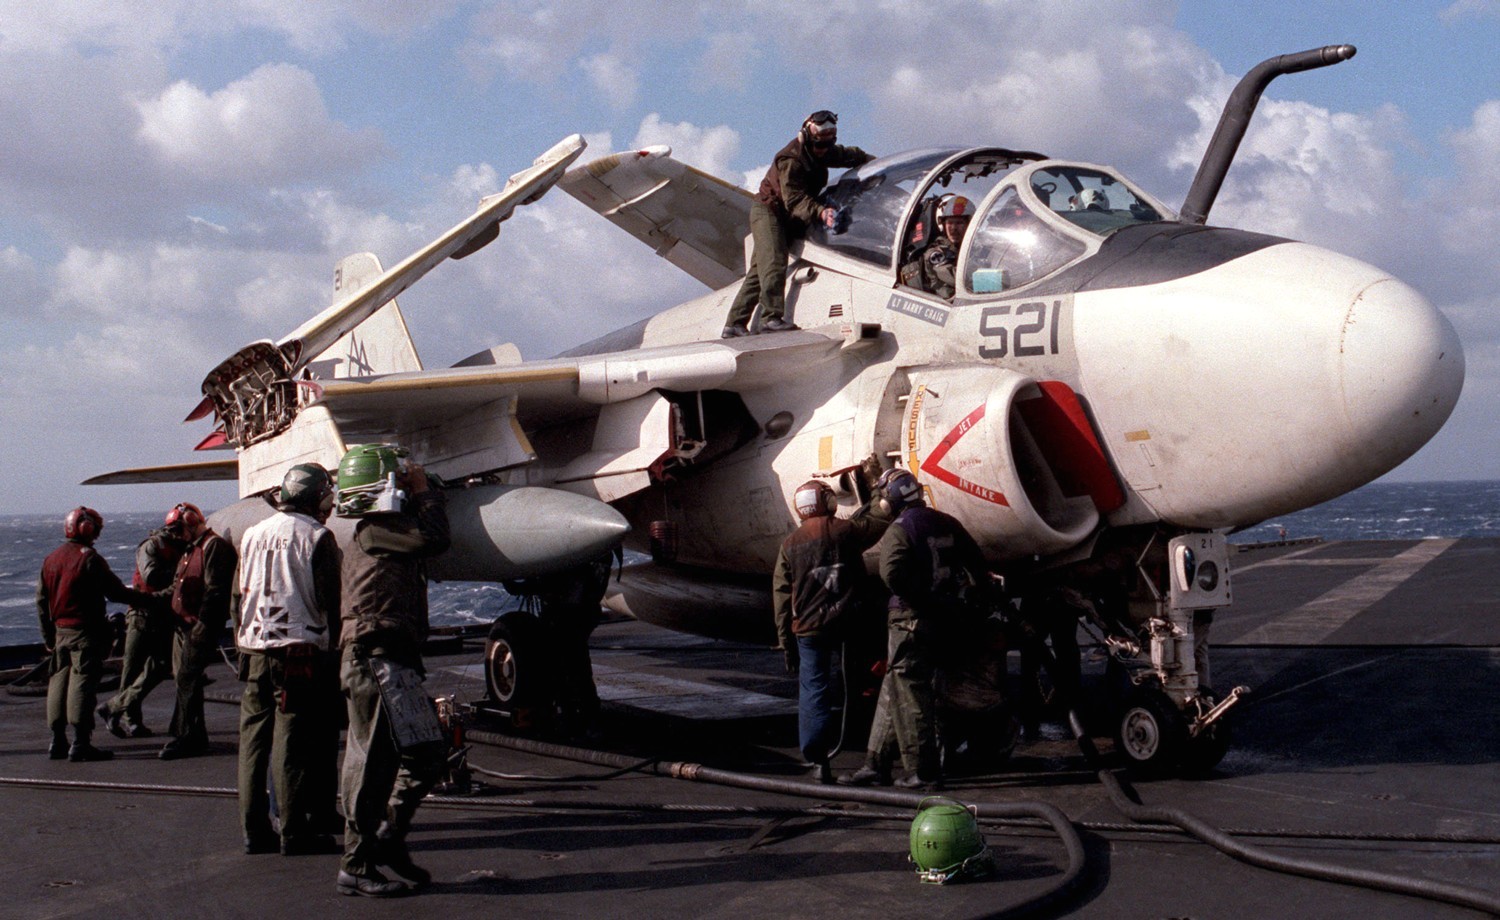 va-85 black falcons attack squadron us navy a-6e intruder carrier air wing cvw-17 uss saratoga cv-60 24 ka-6d